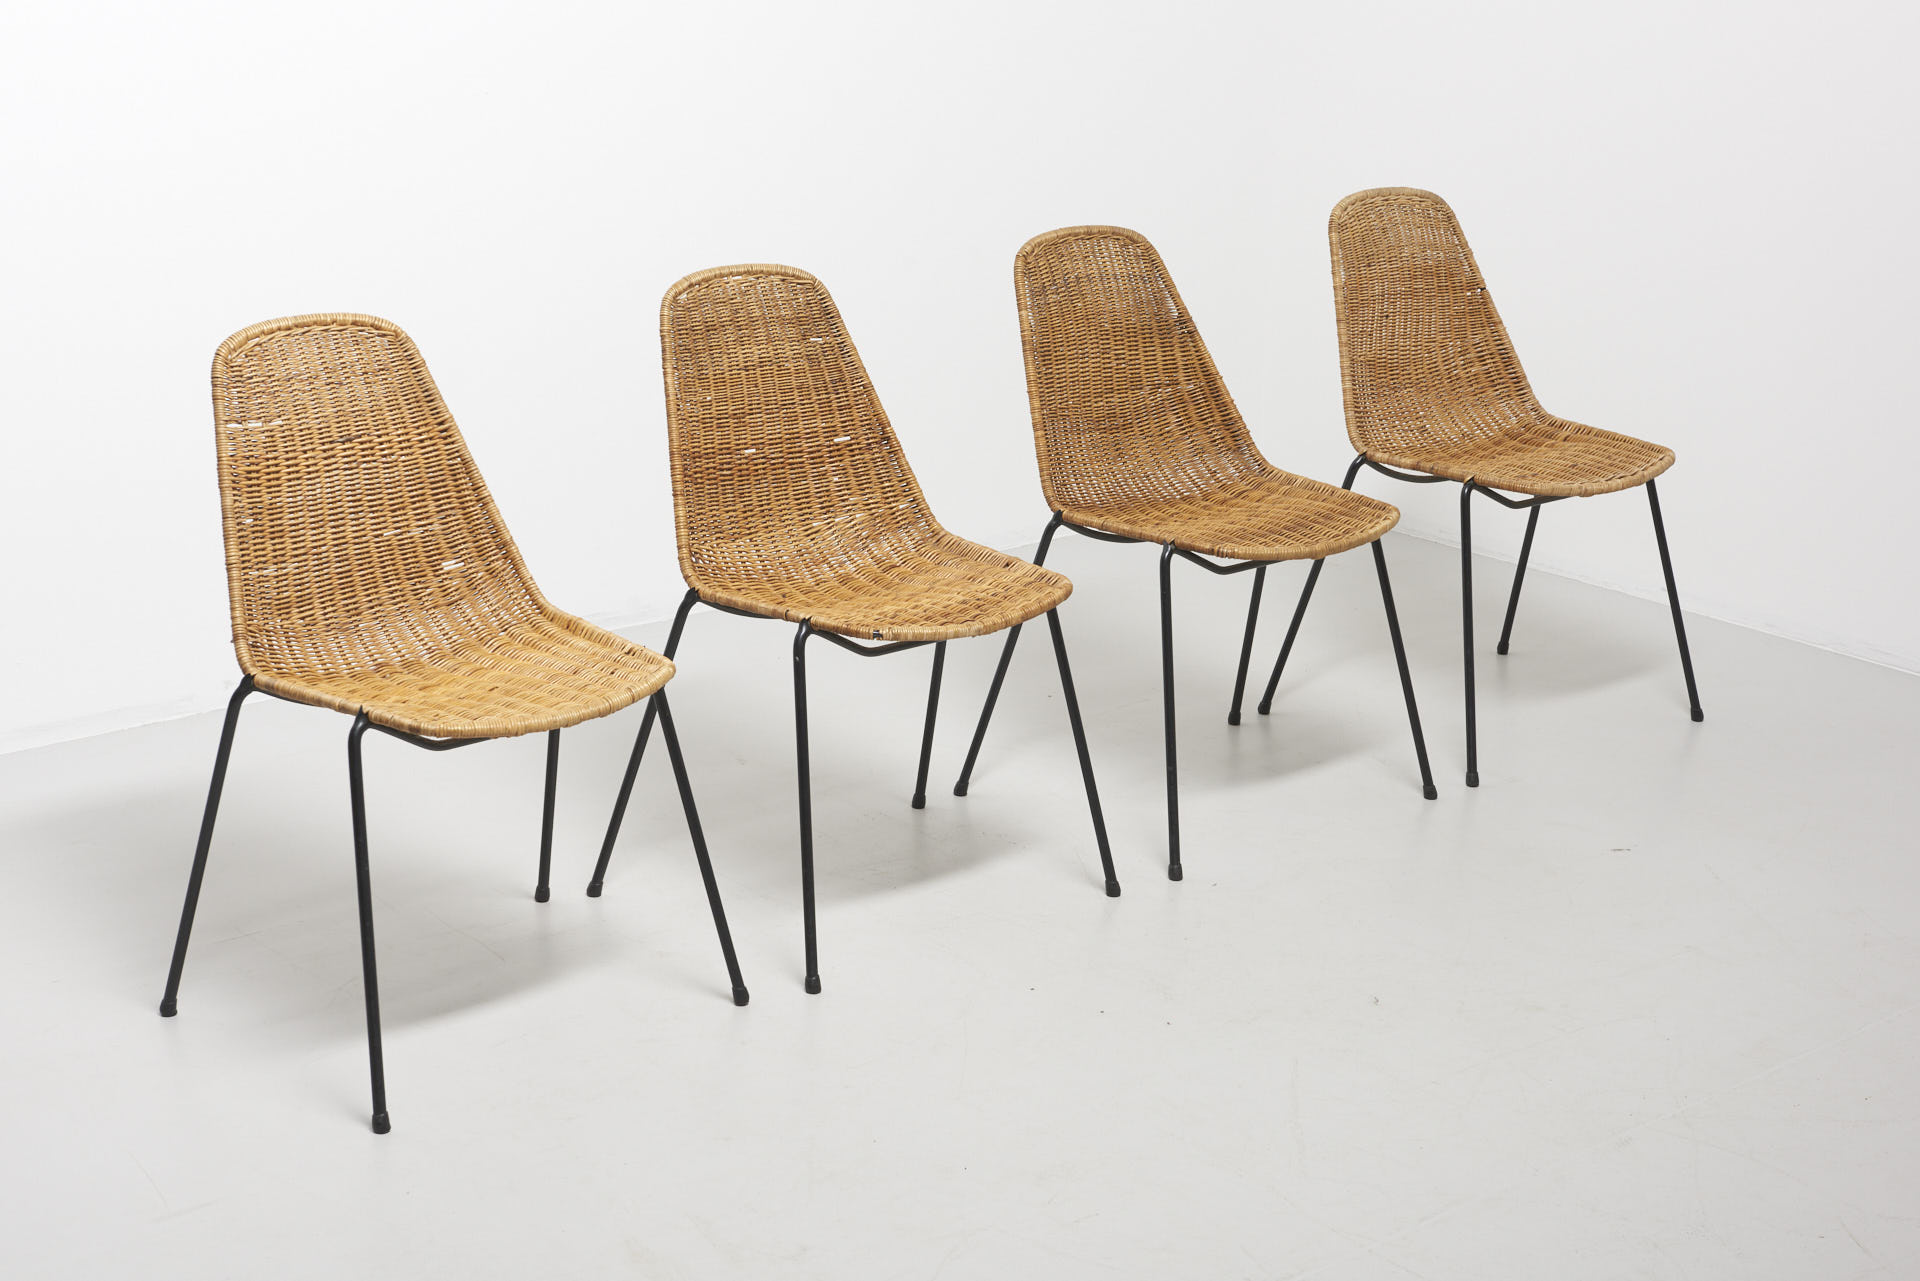 modestfurniture-vintage-2190-rattan-chairs-gian-franco-legler01